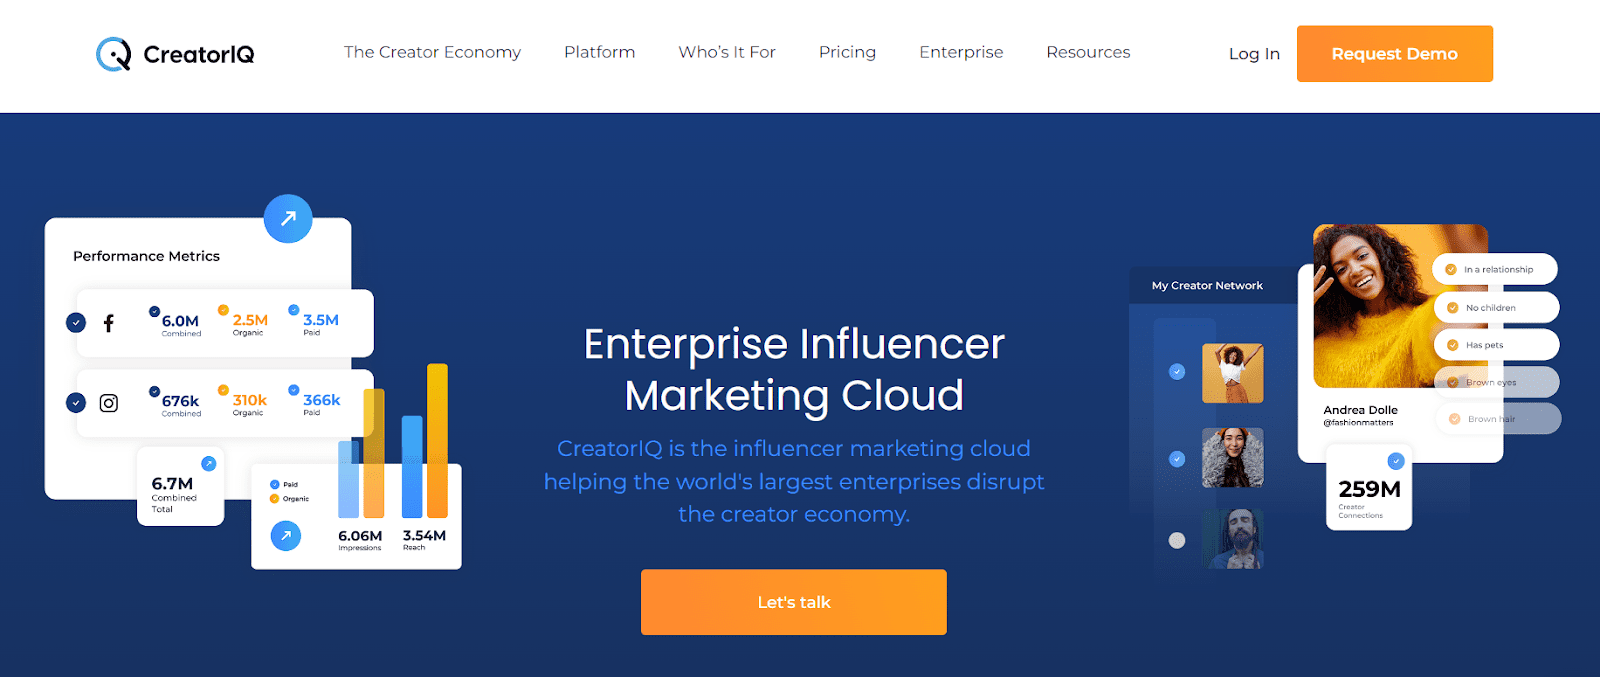 CreatorIQ Marketing Platform for Social Media